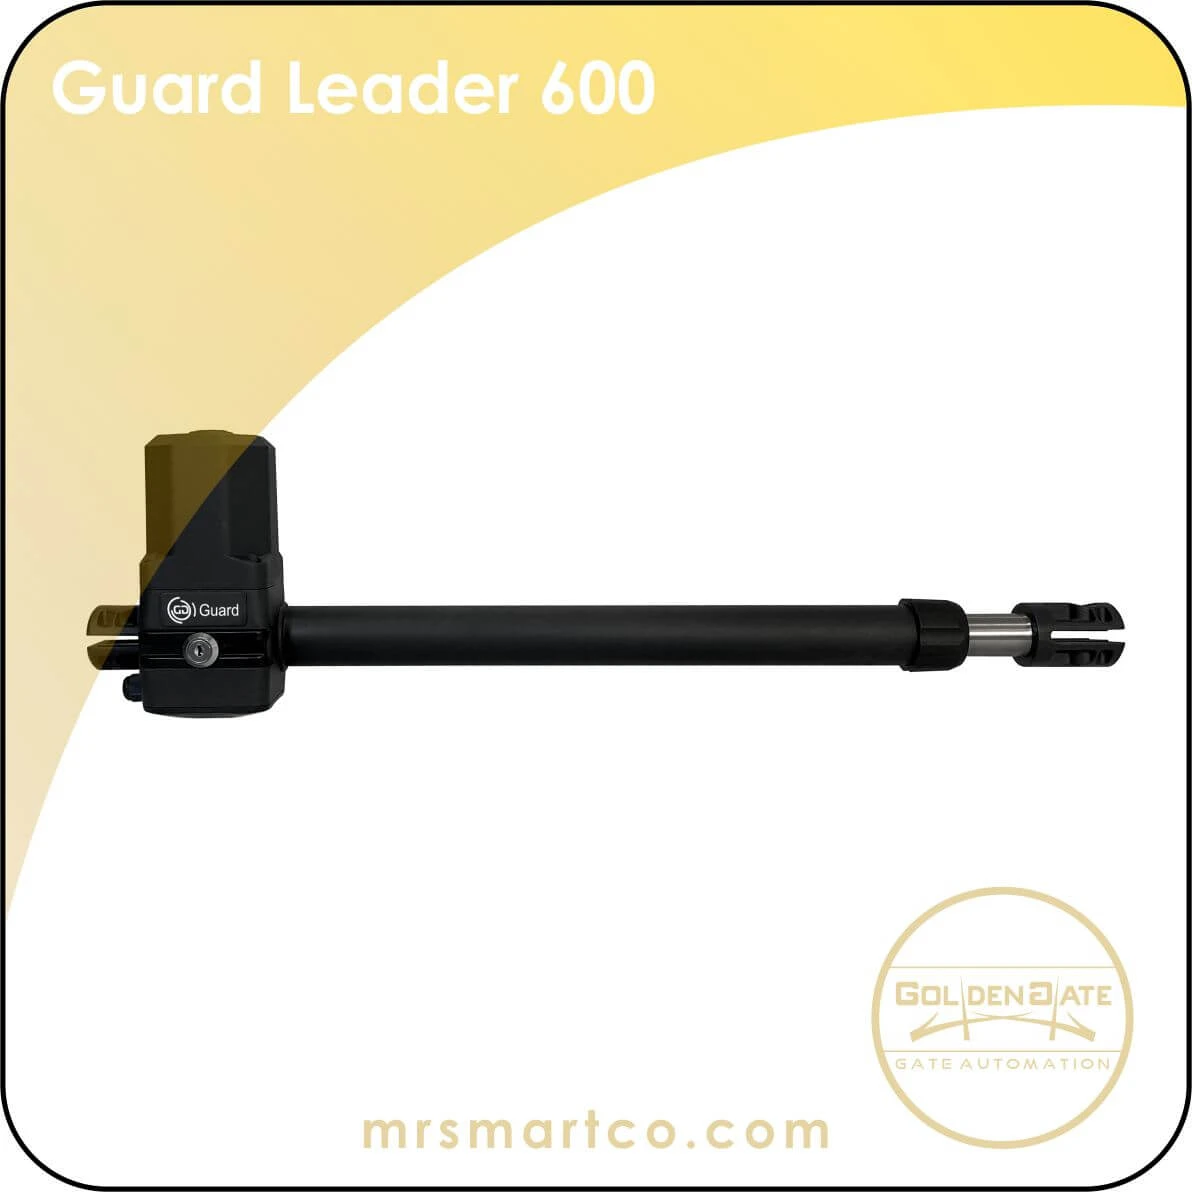 Guard leader 600